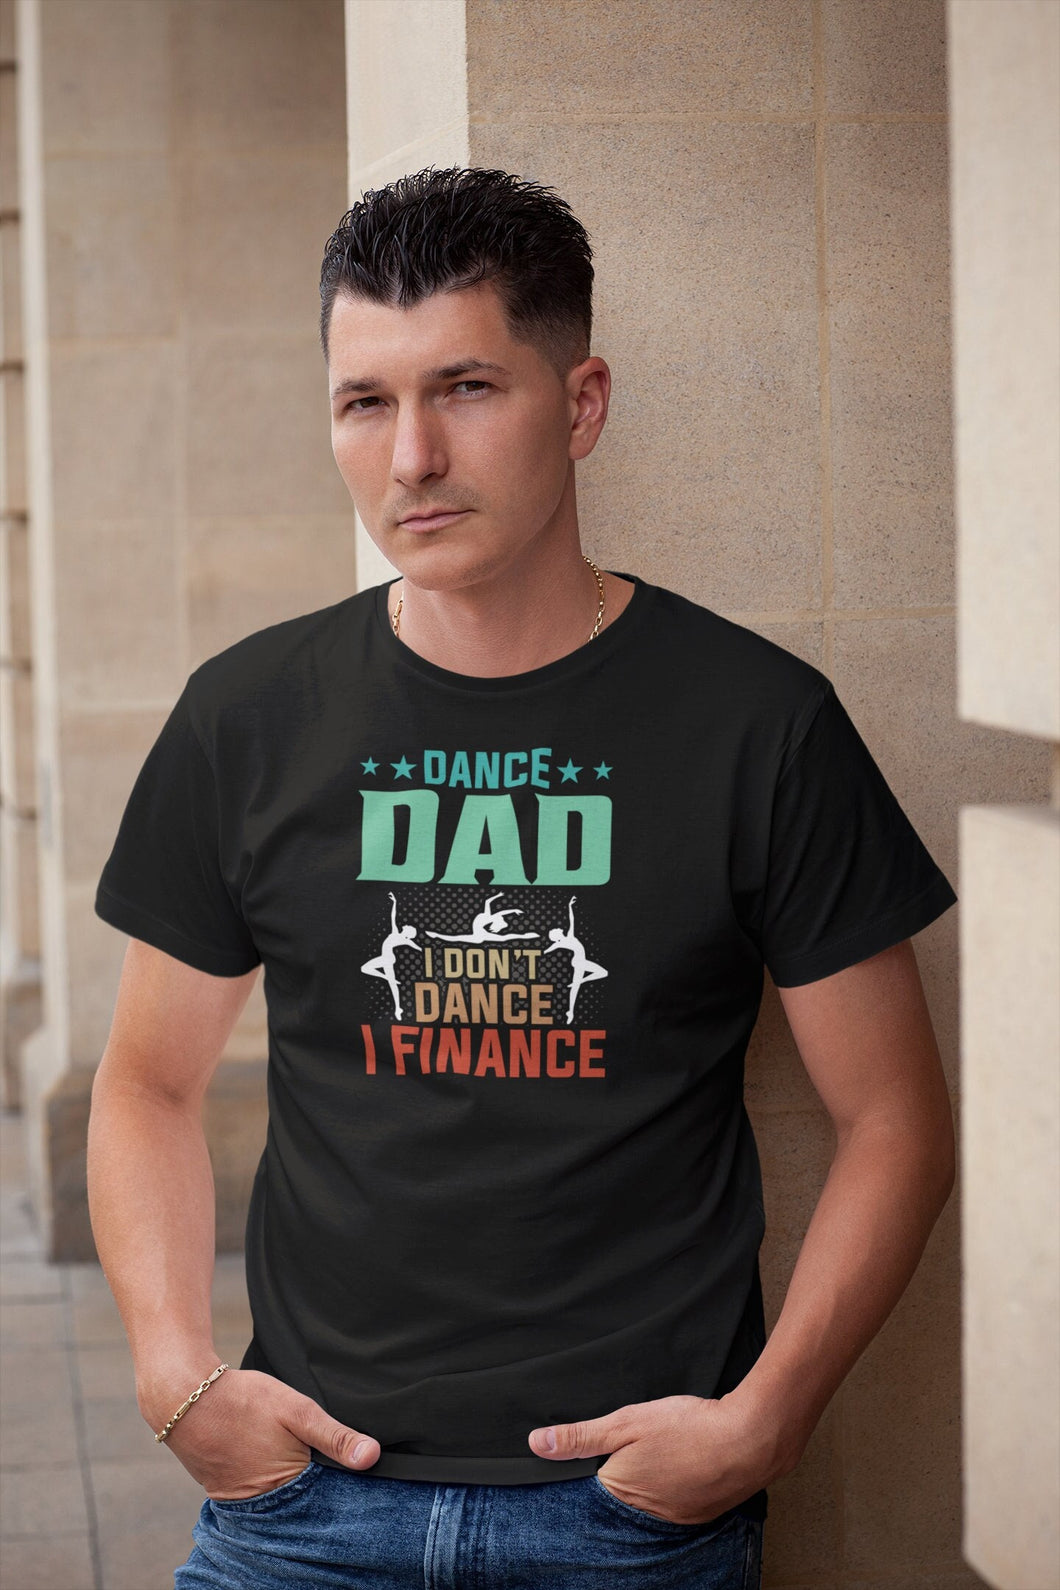 Dance Dad I don't dance I just finance, Funny Dance Shirt, Dance Shirt, Dance Dad Tee, Dad Dance